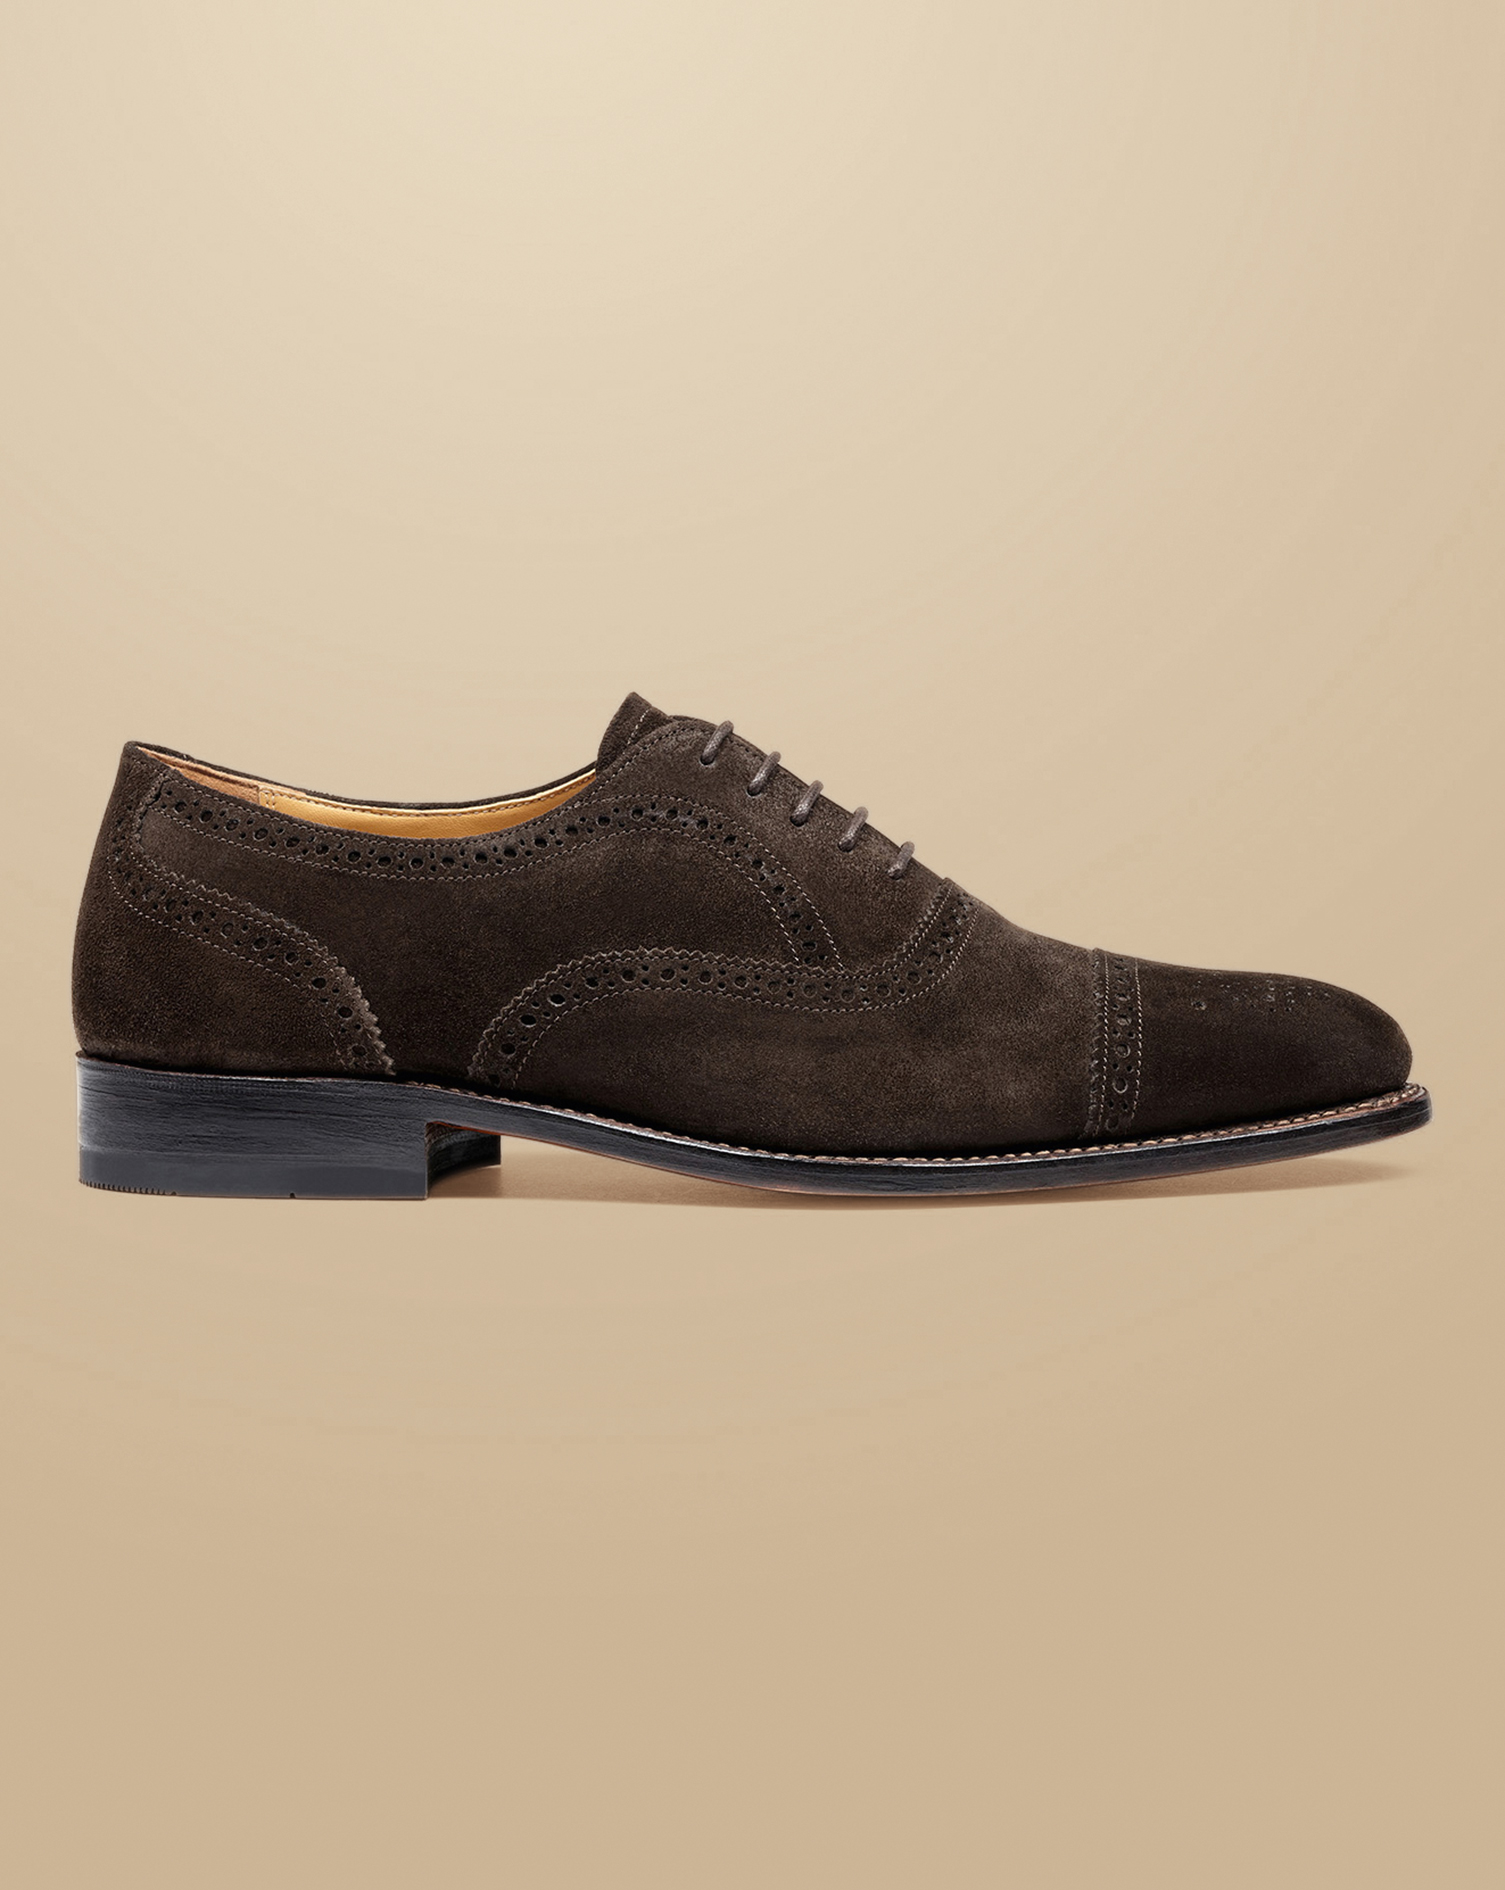 Men's Charles Tyrwhitt Oxford Brogue Shoes - Dark Chocolate Brown Size 9.5 Suede
